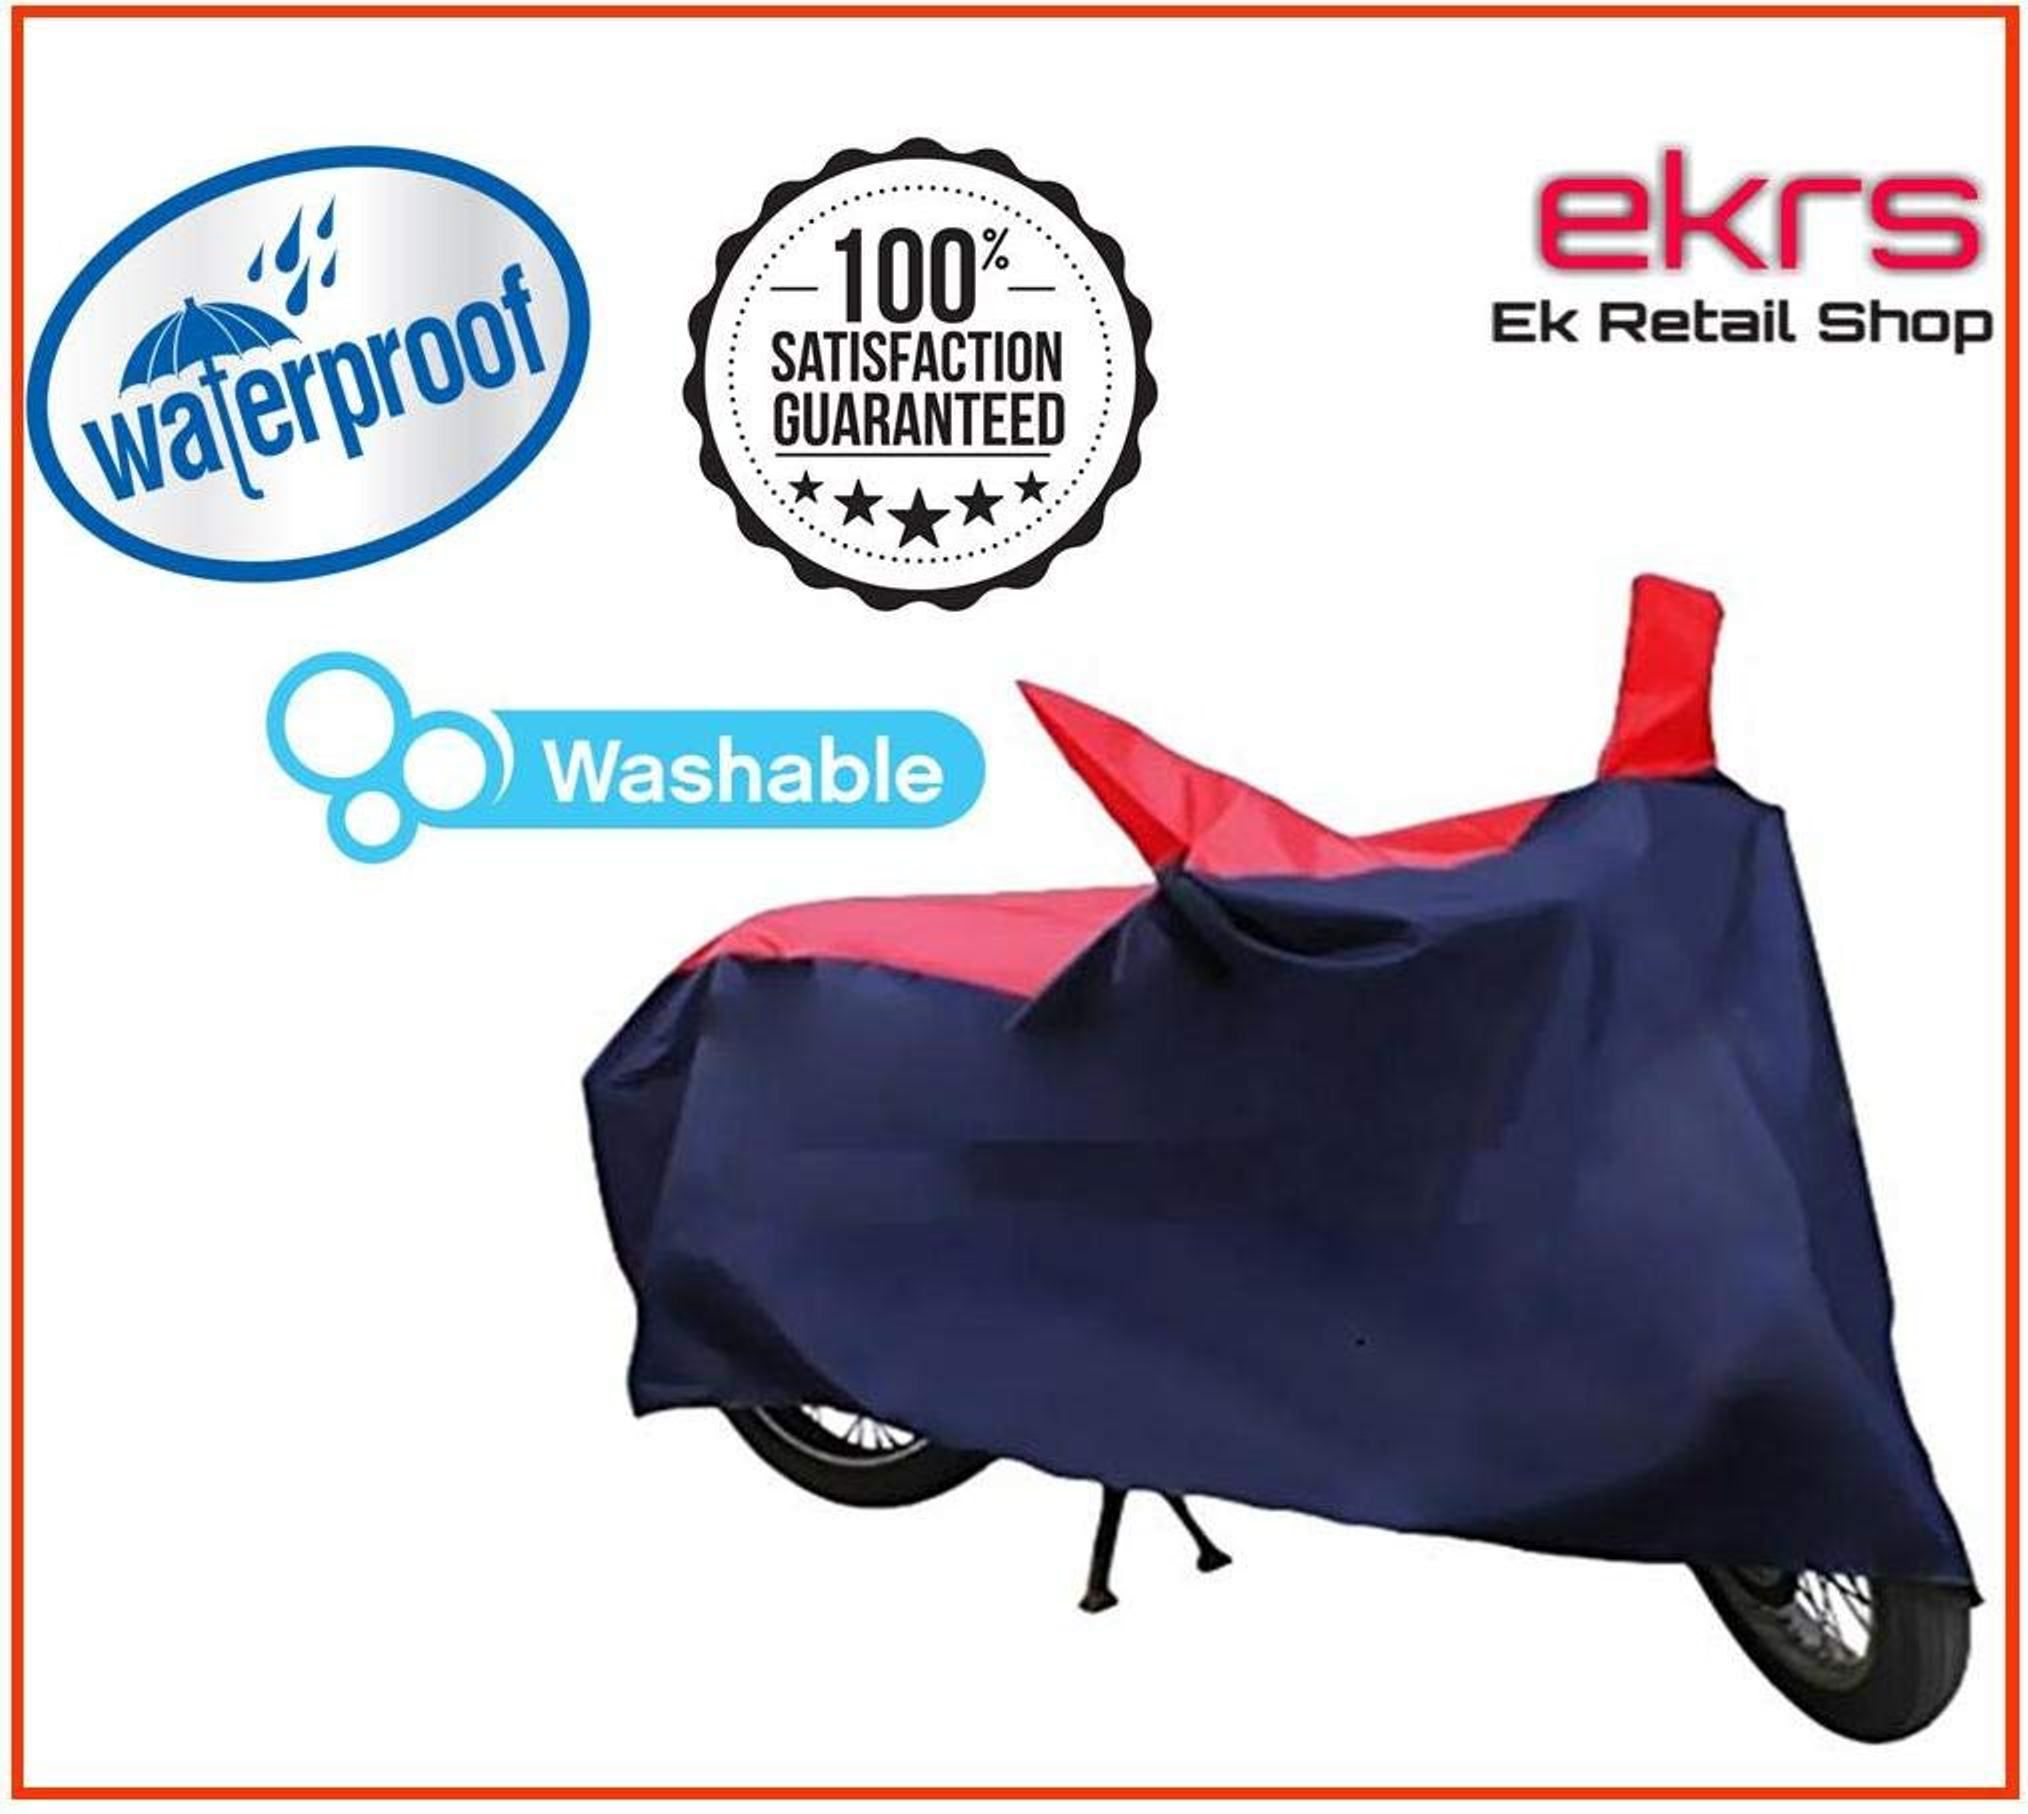 EKRS Nevy/Red Matty Waterproof Bike Body Cover for Hero Glamour